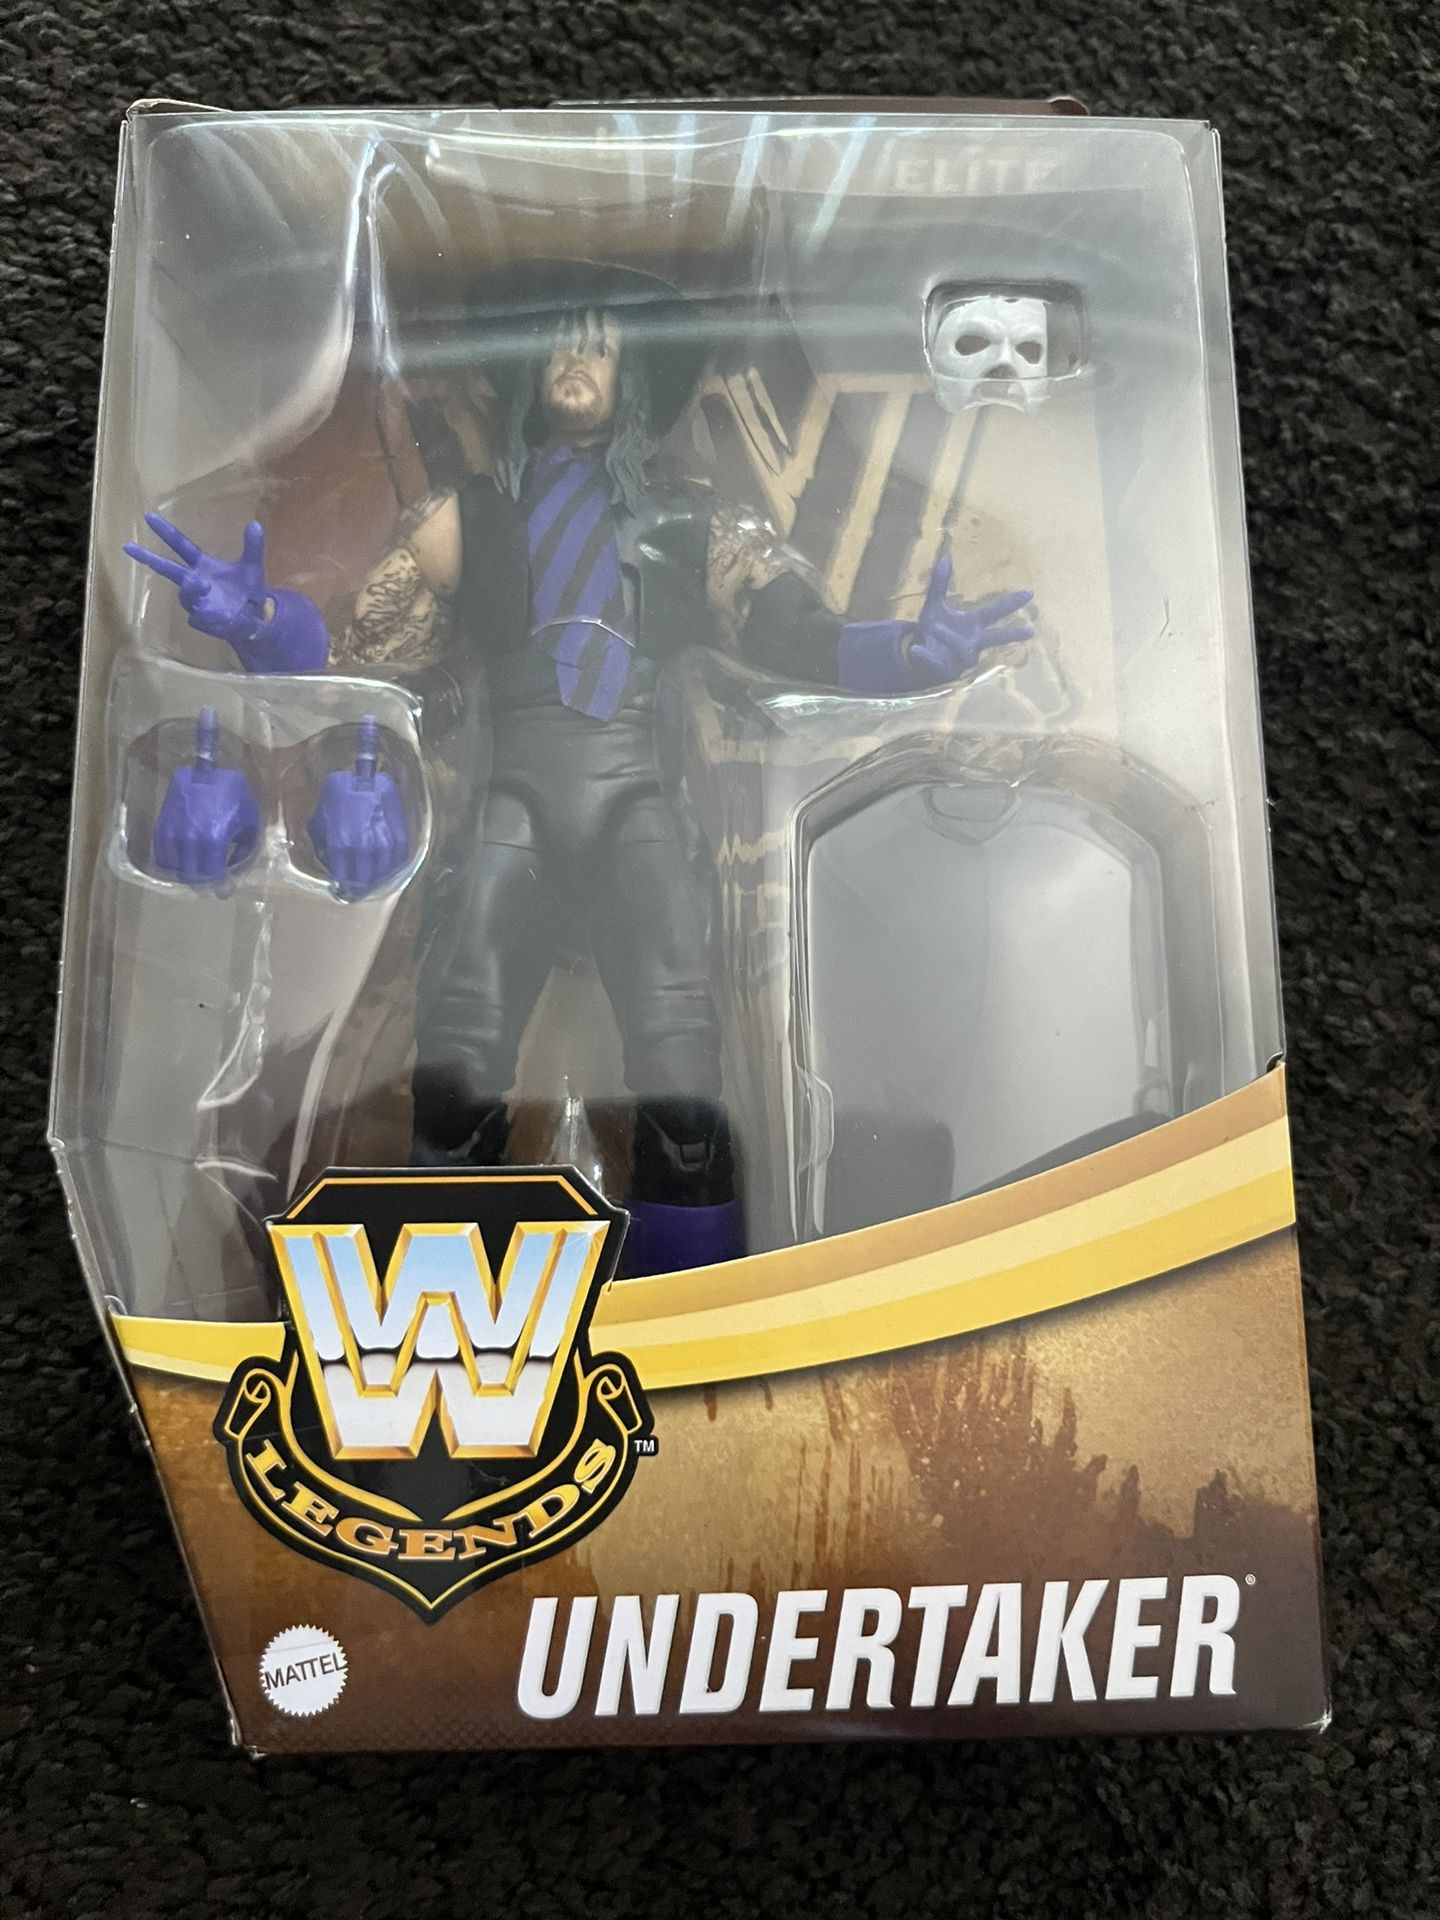 Wwf Undertaker Action Figure